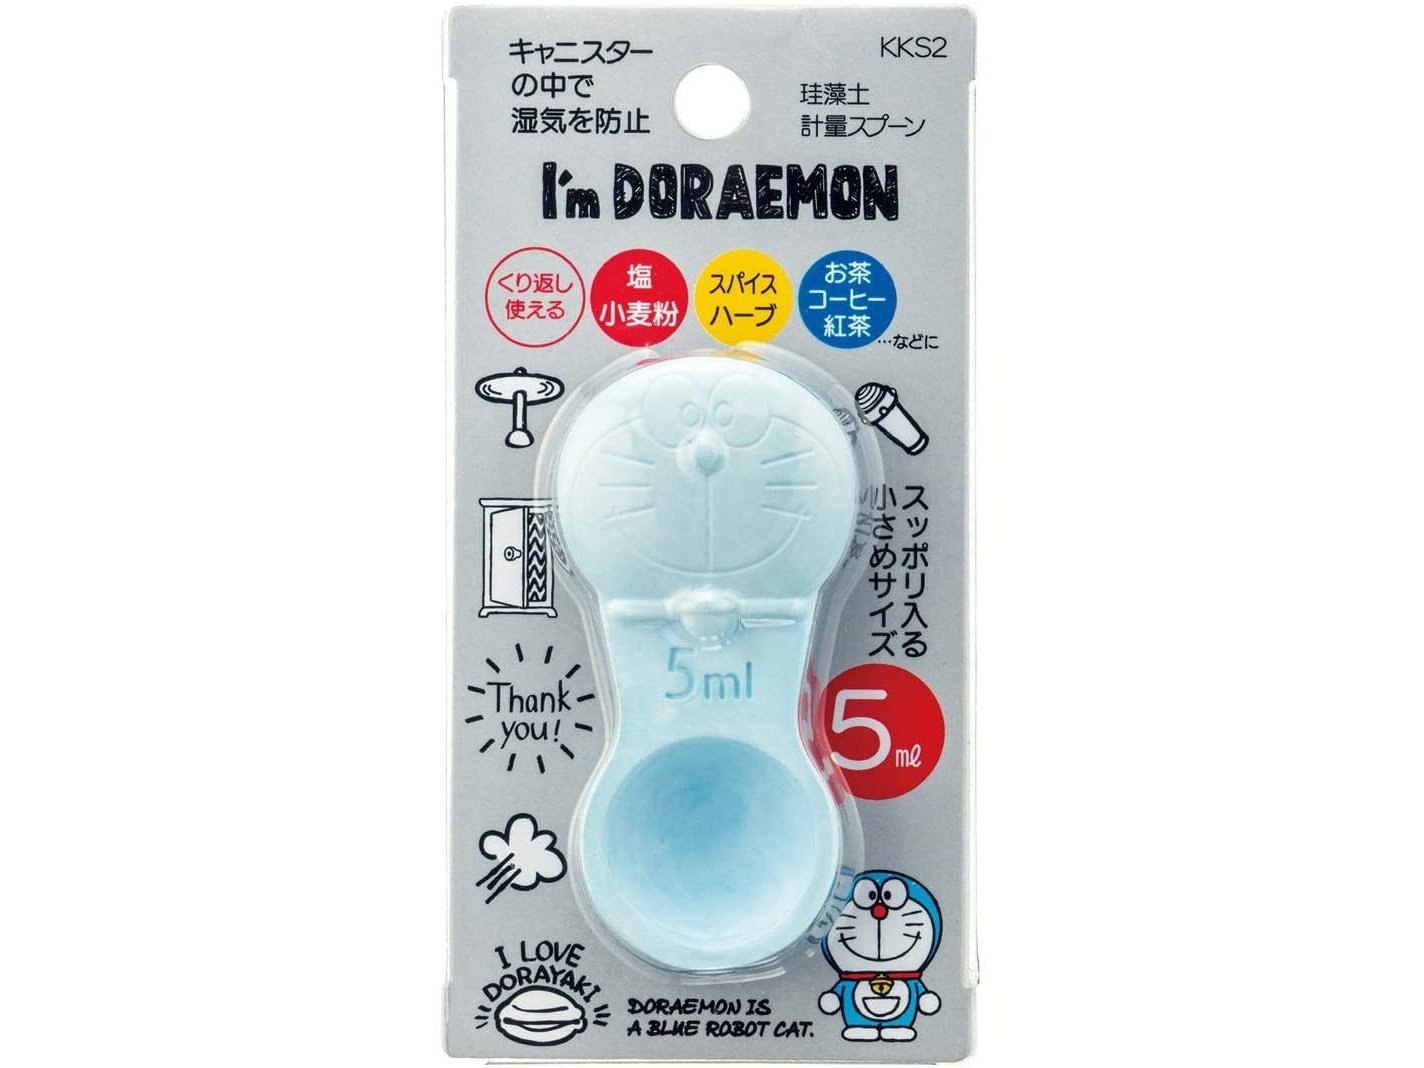 Skater Doraemon Diatomite 5ml Measuring Spoon